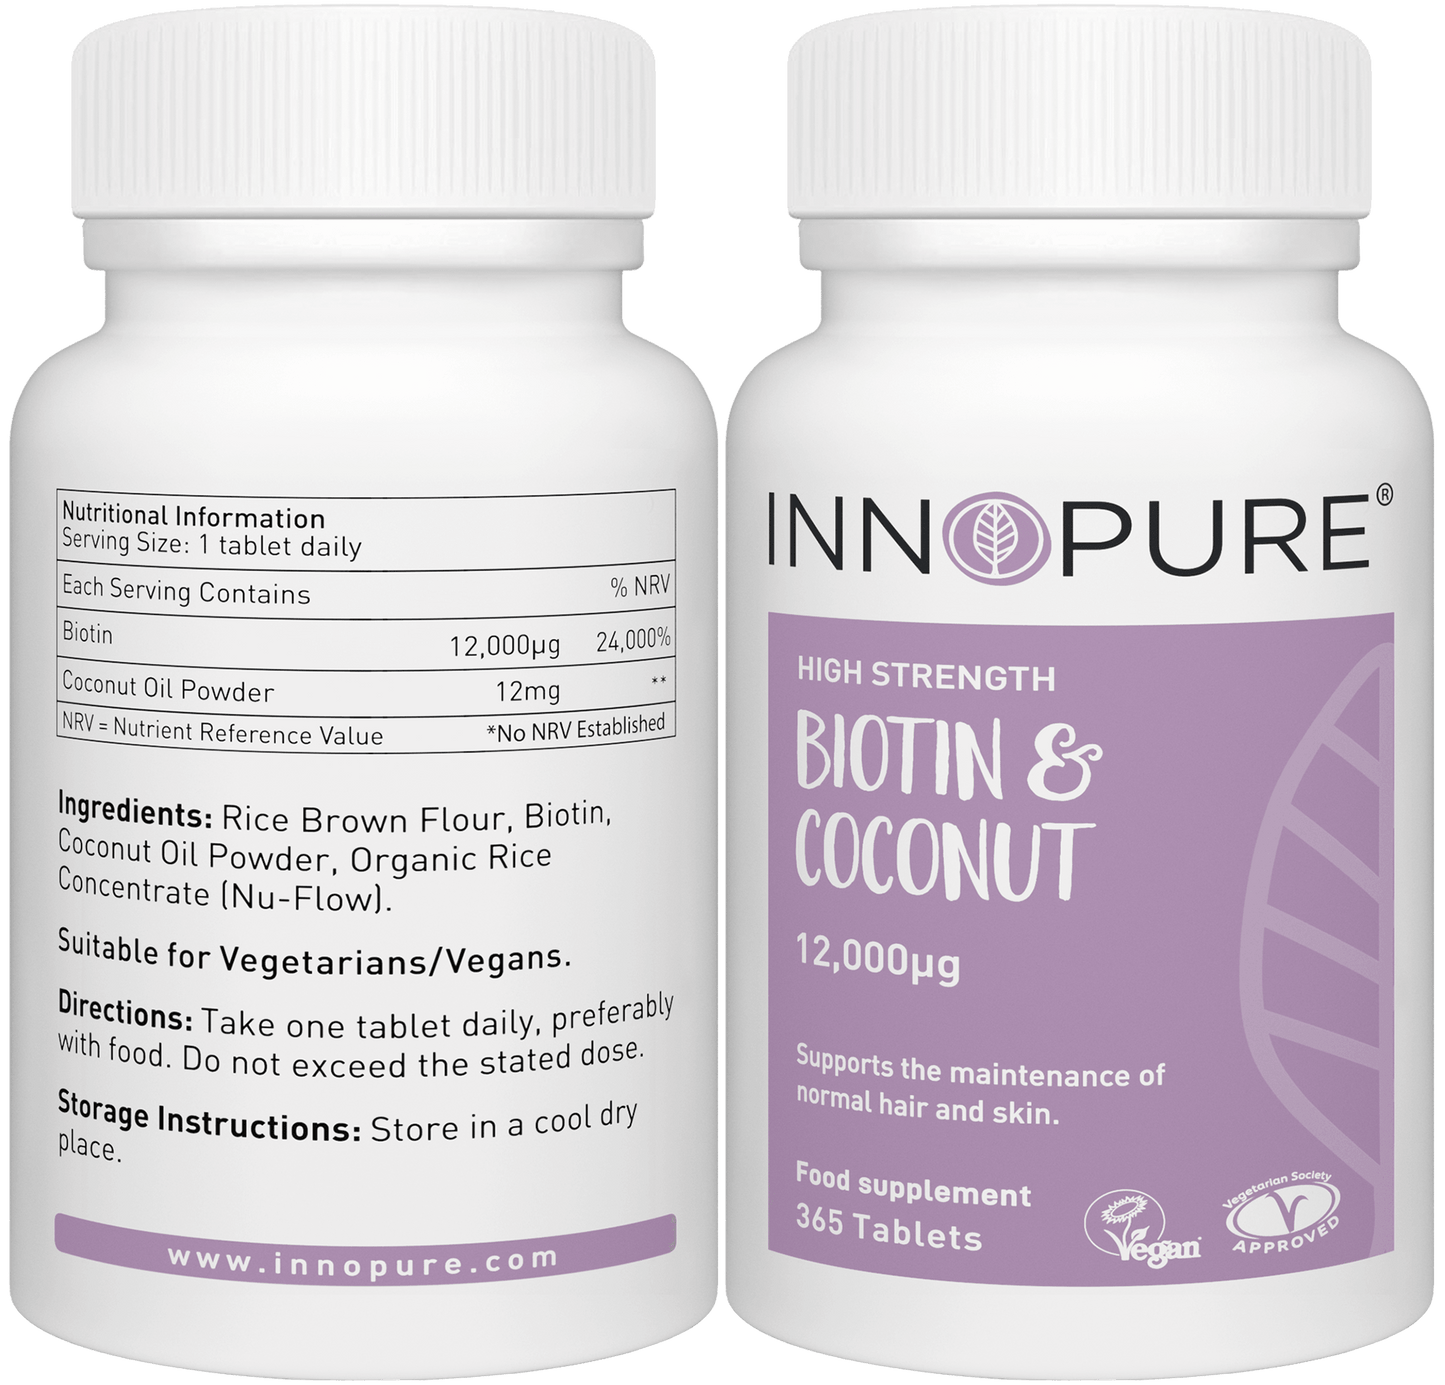 Biotin & Coconut 12,000µg - Innopure